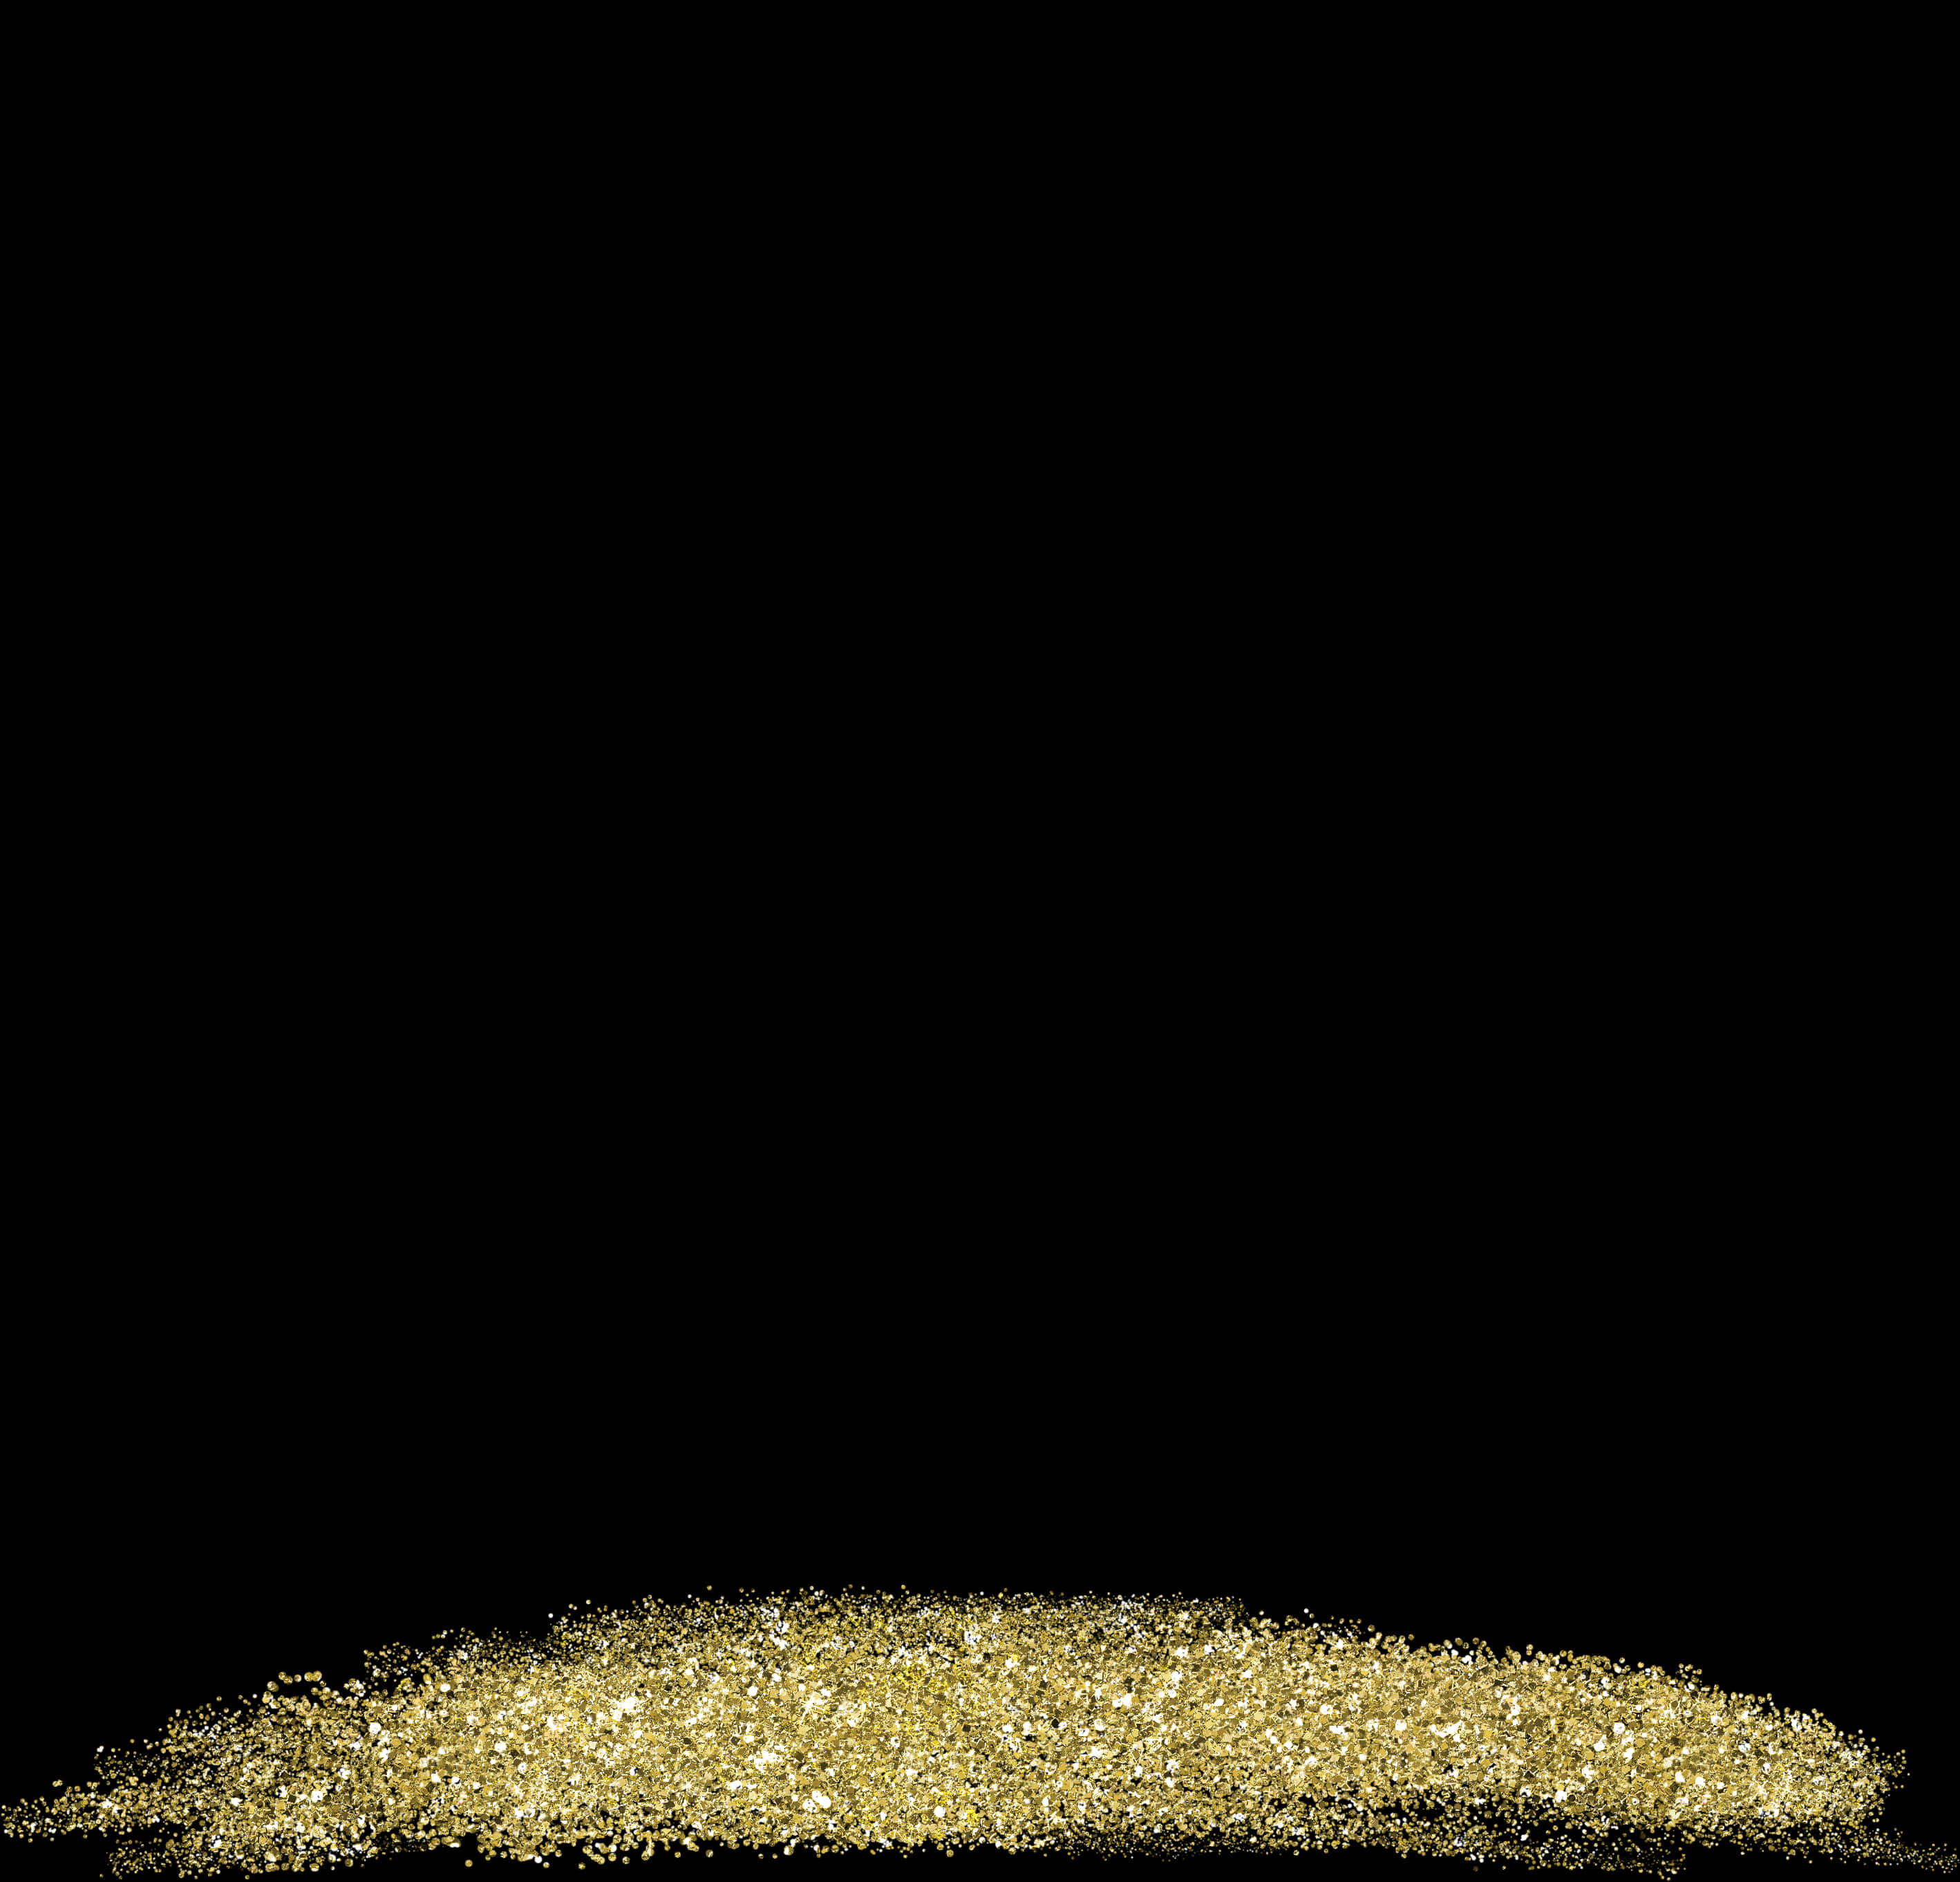 A Gold Glitter On A Black Background